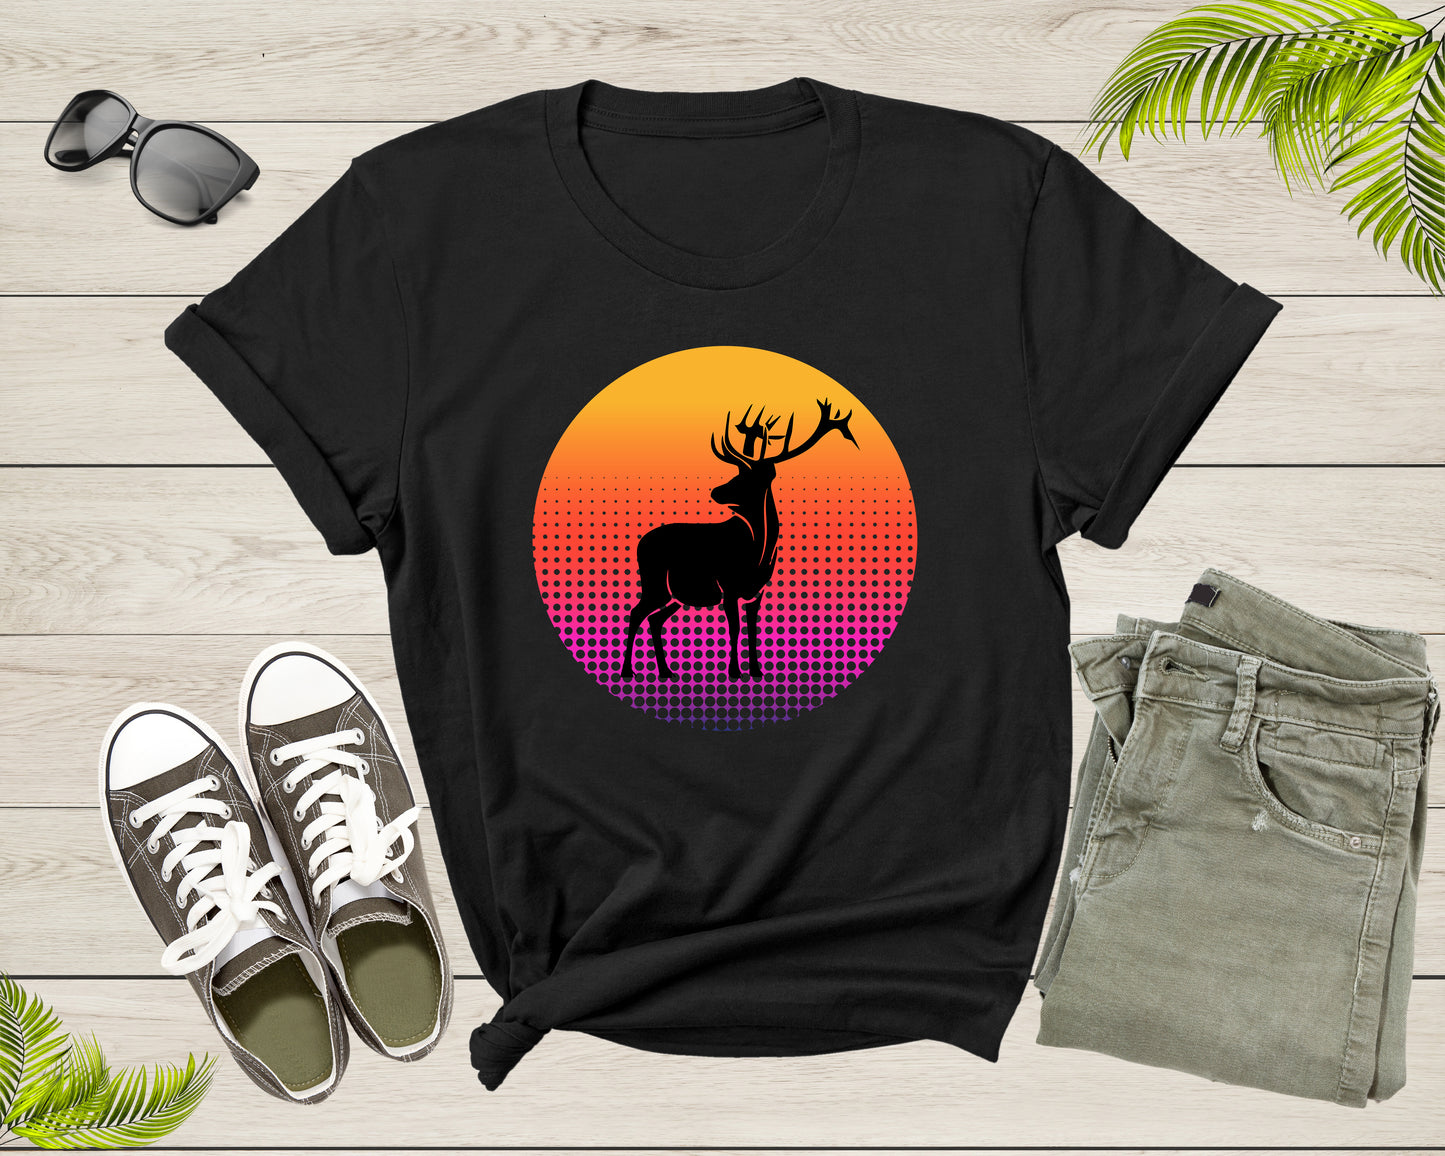 Xmas Deer Reindeer Elk Wild Animal Silhouette at Sunset T-Shirt Cool Christmas Lover Gift T Shirt for Men Women Boys Girls Teens Tshirt